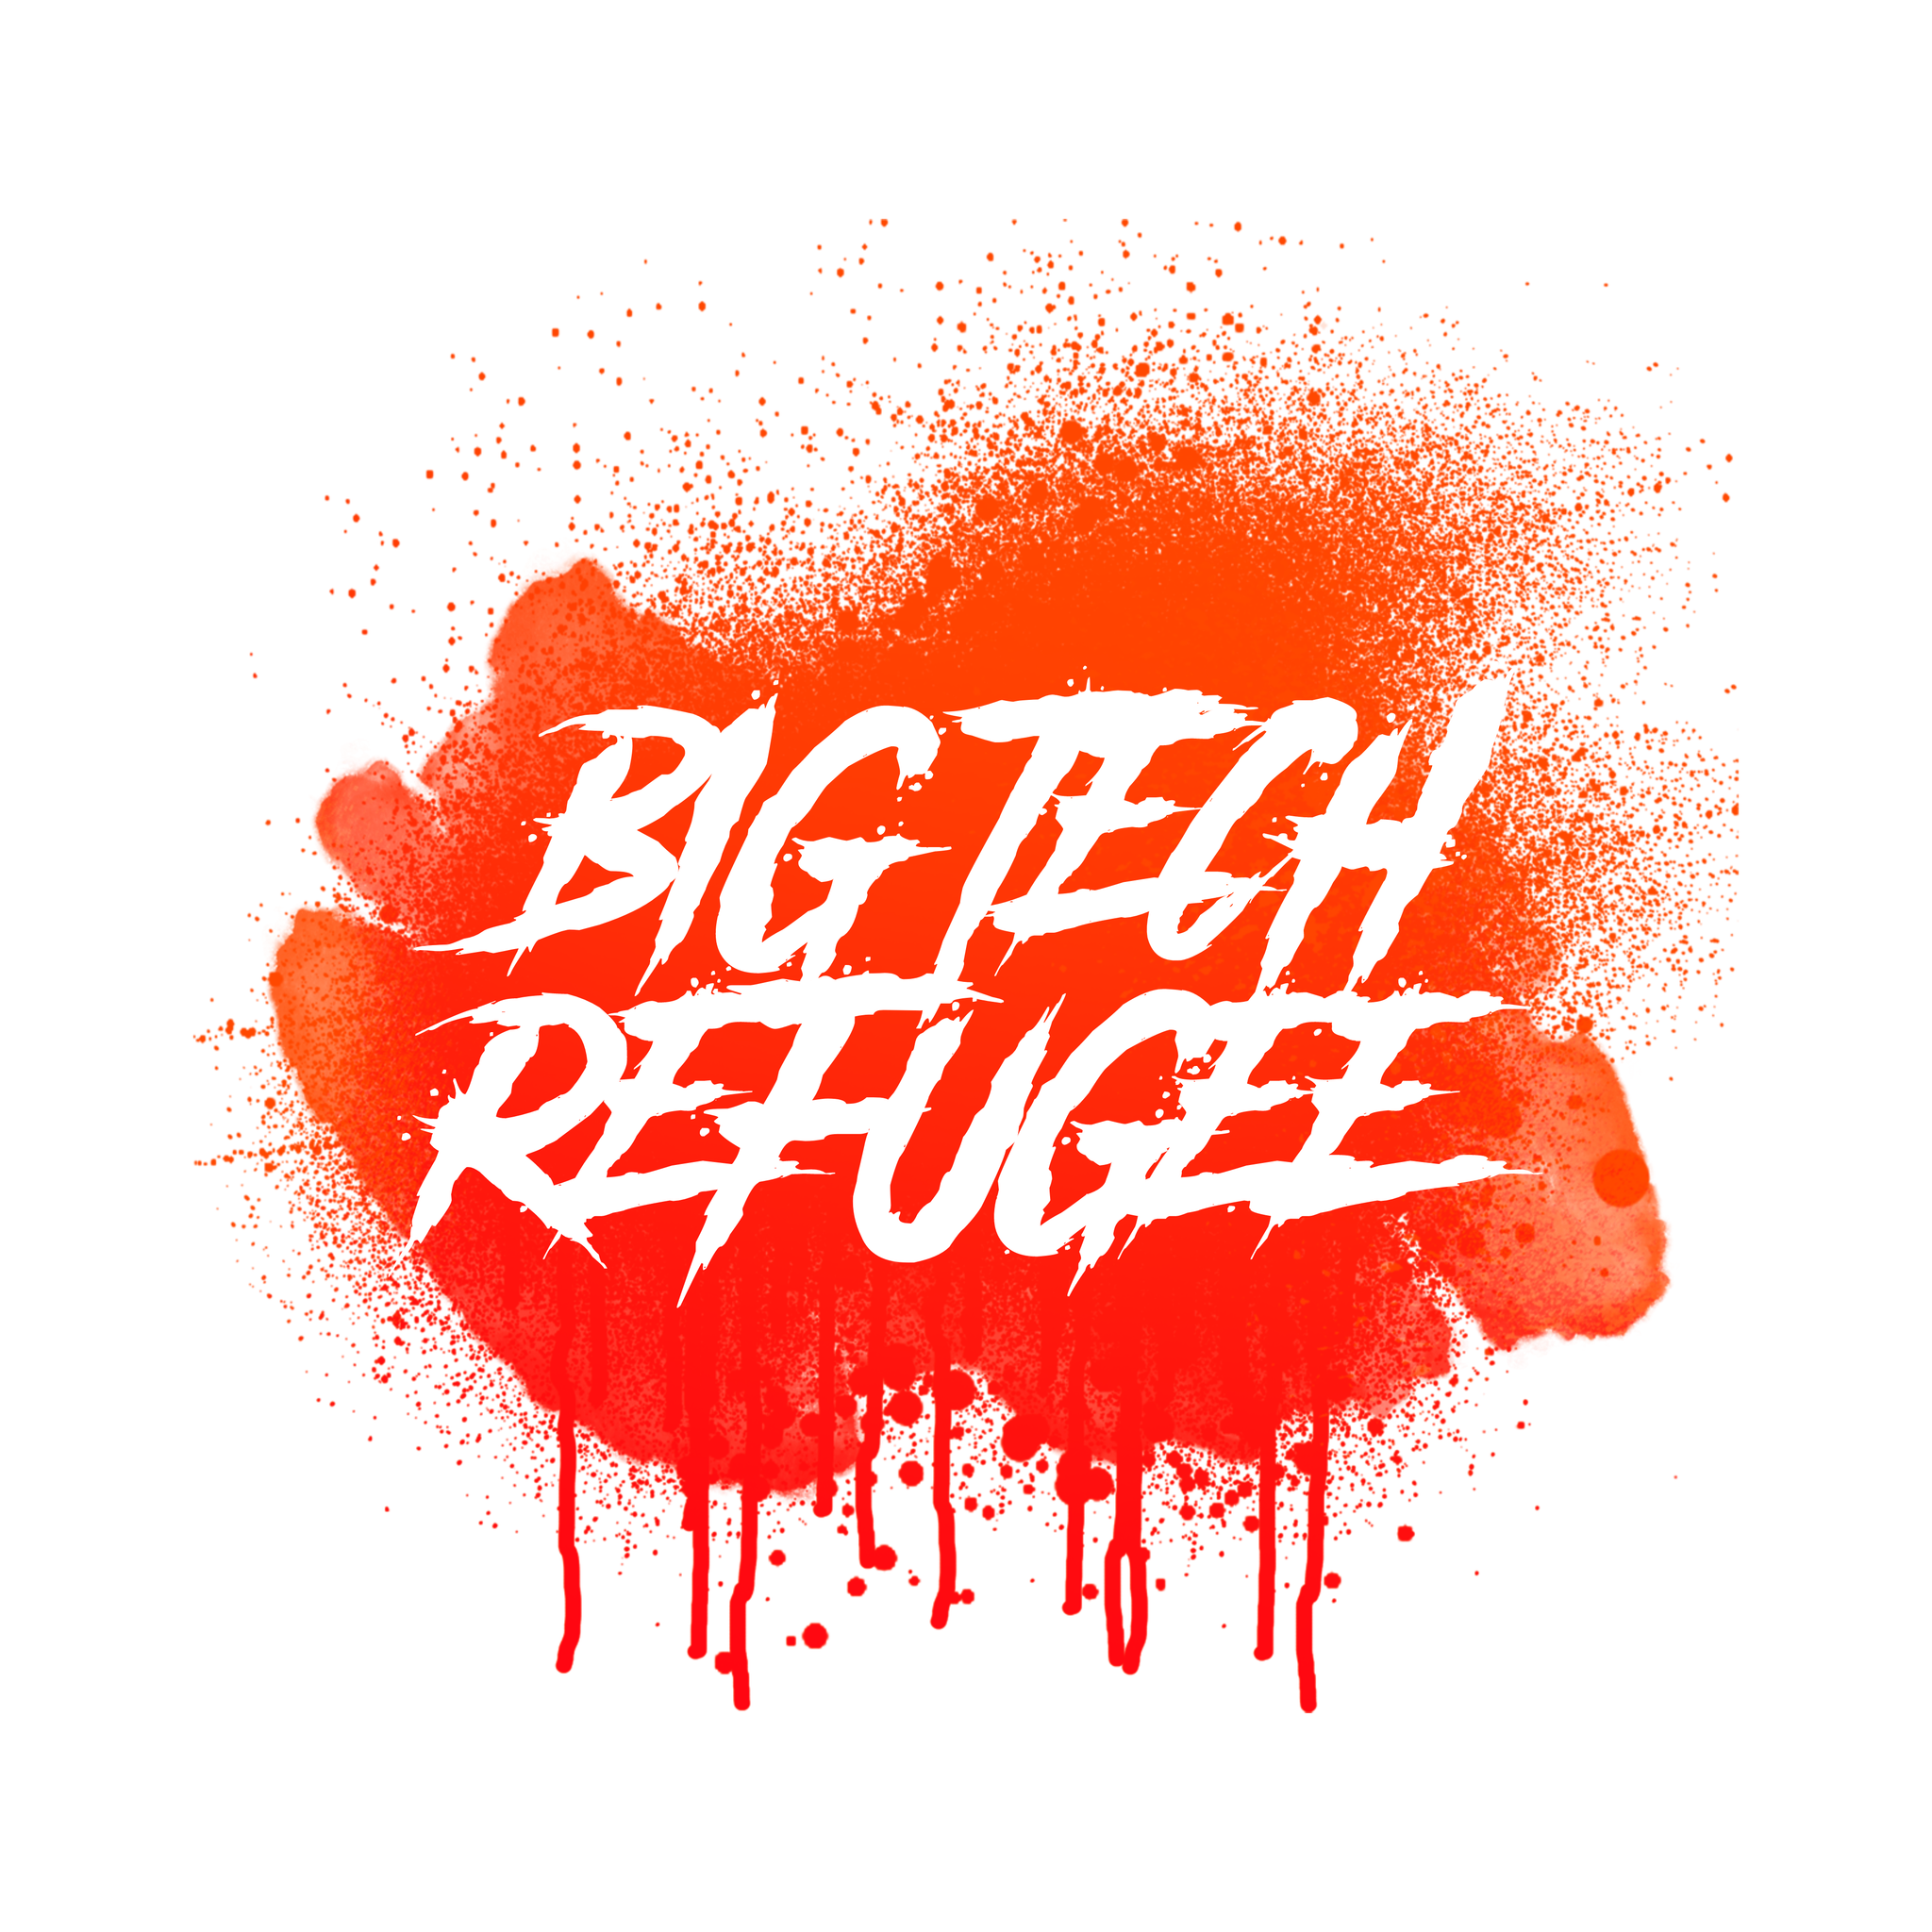 Big Tech Refugee Klistermärke